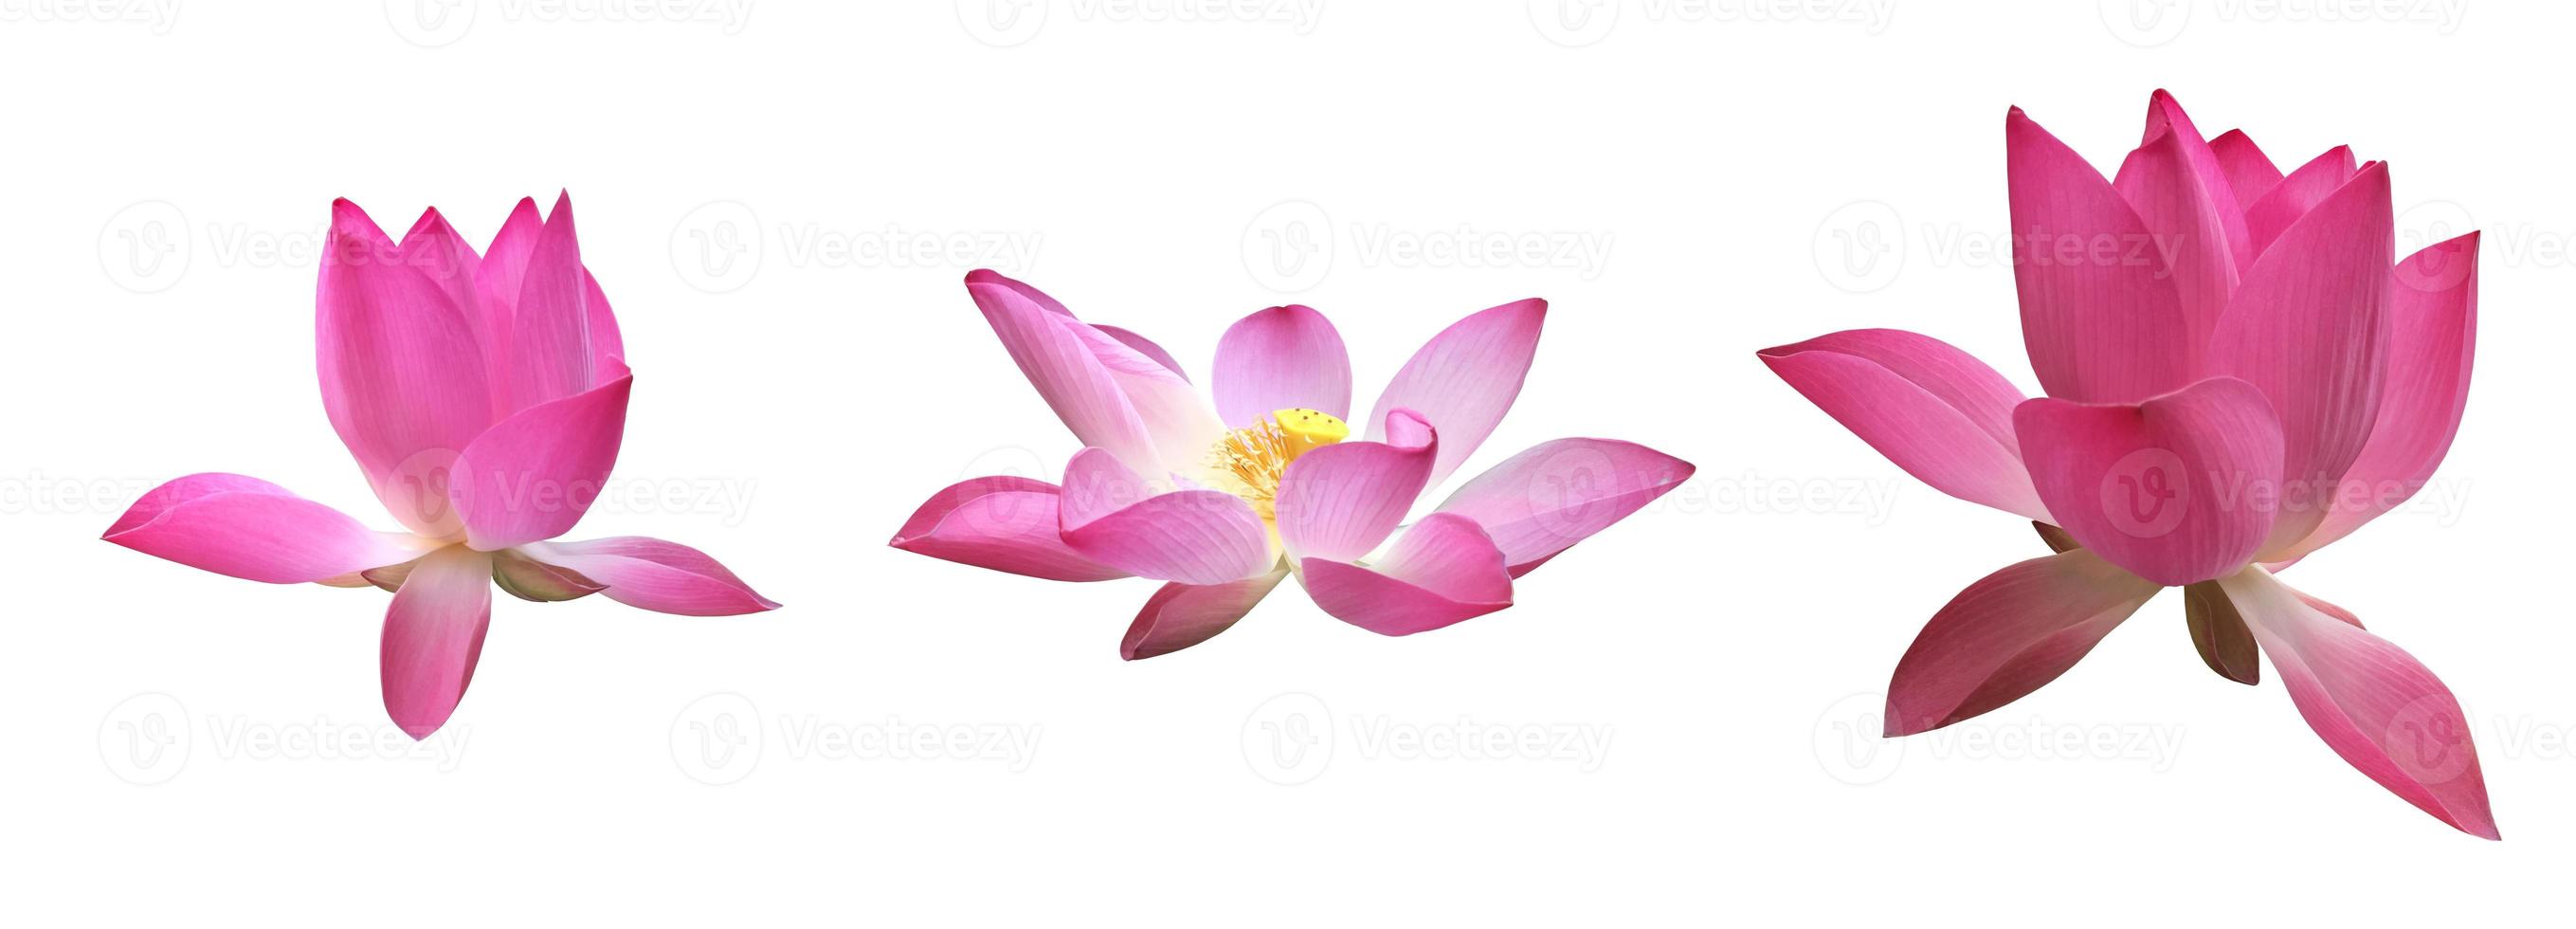 nenúfar rosa aislado o flor de loto con caminos de recorte. foto